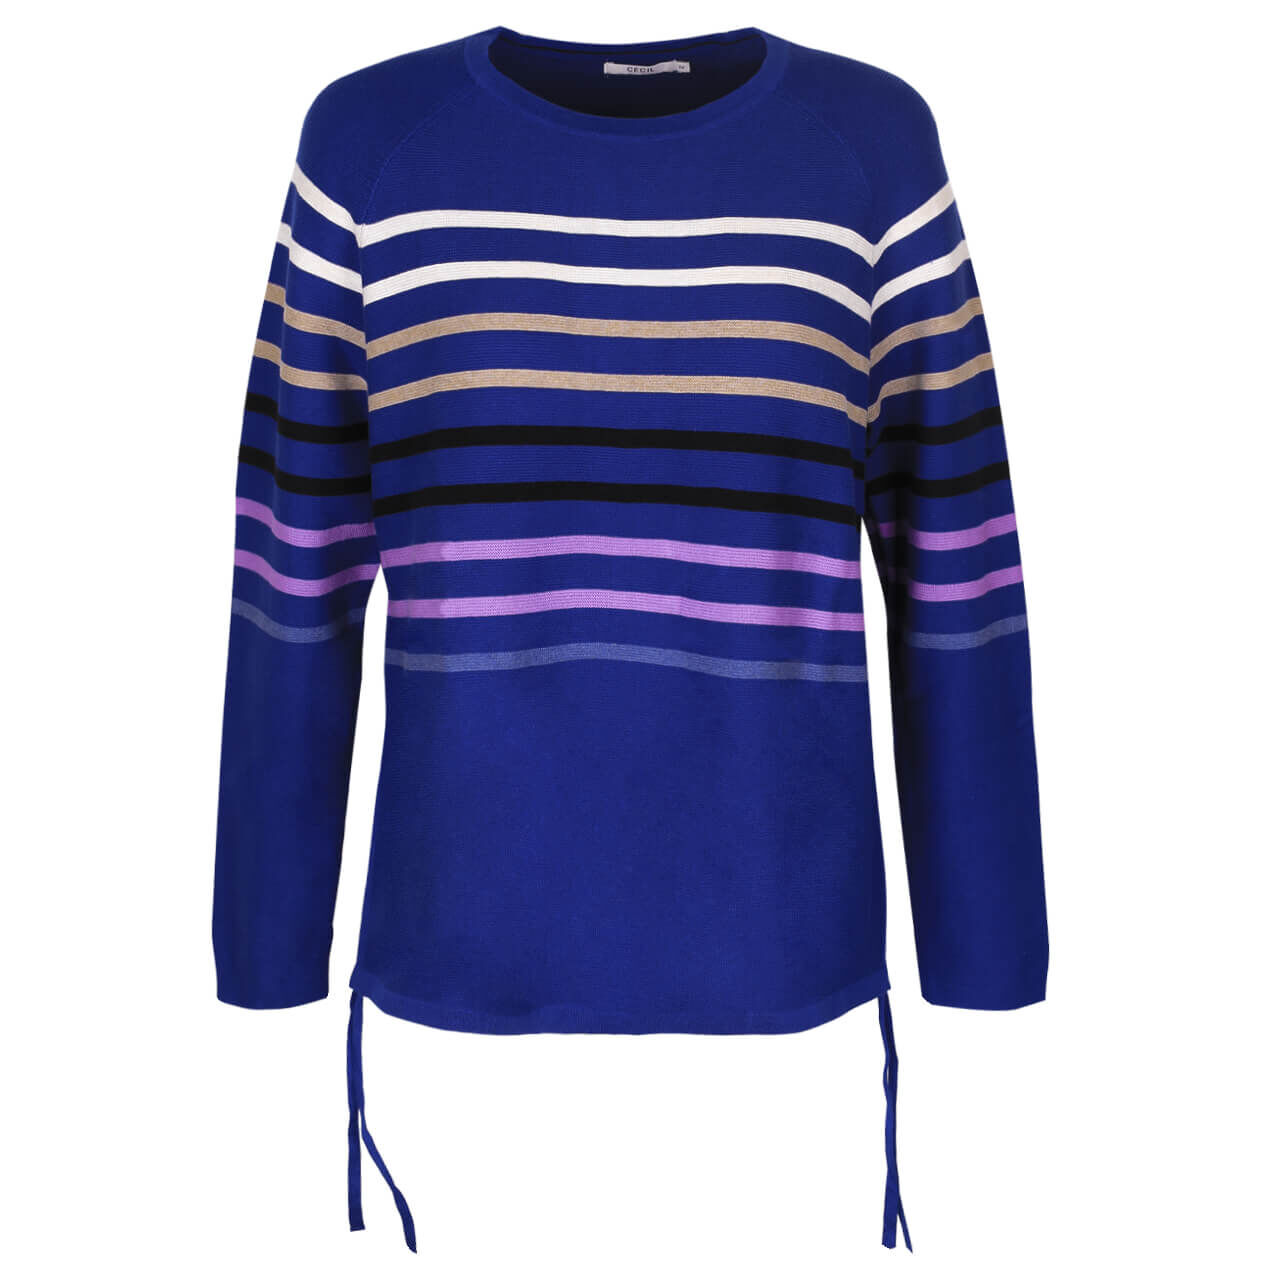 Cecil Multicolored Stripe Pullover für Damen in Kornblumenblau gestreift, FarbNr.: 33444